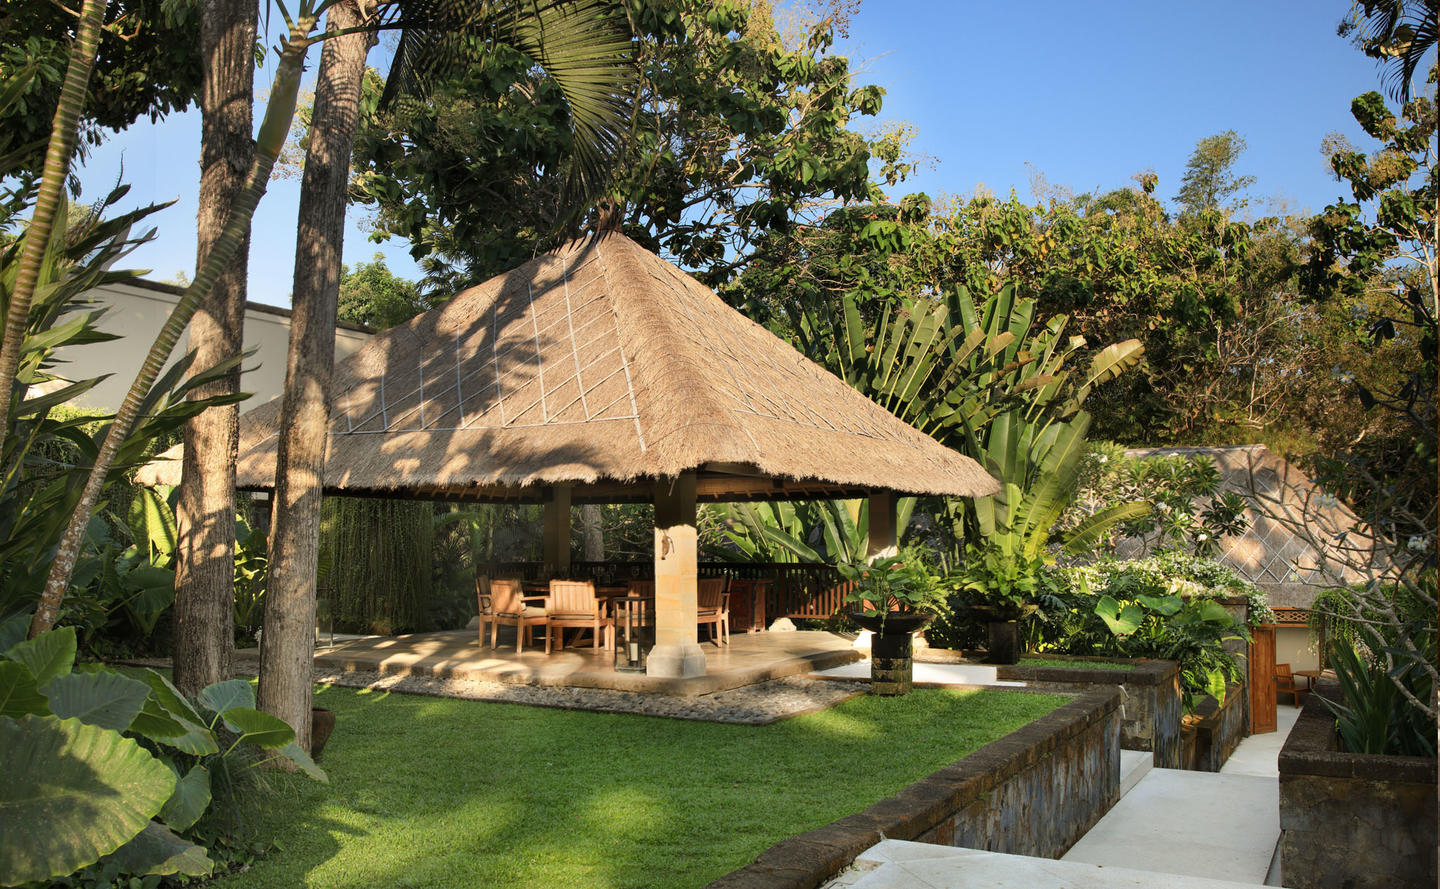 Aman Villas at Nusa Dua - Indonesia - Dining Pavilion